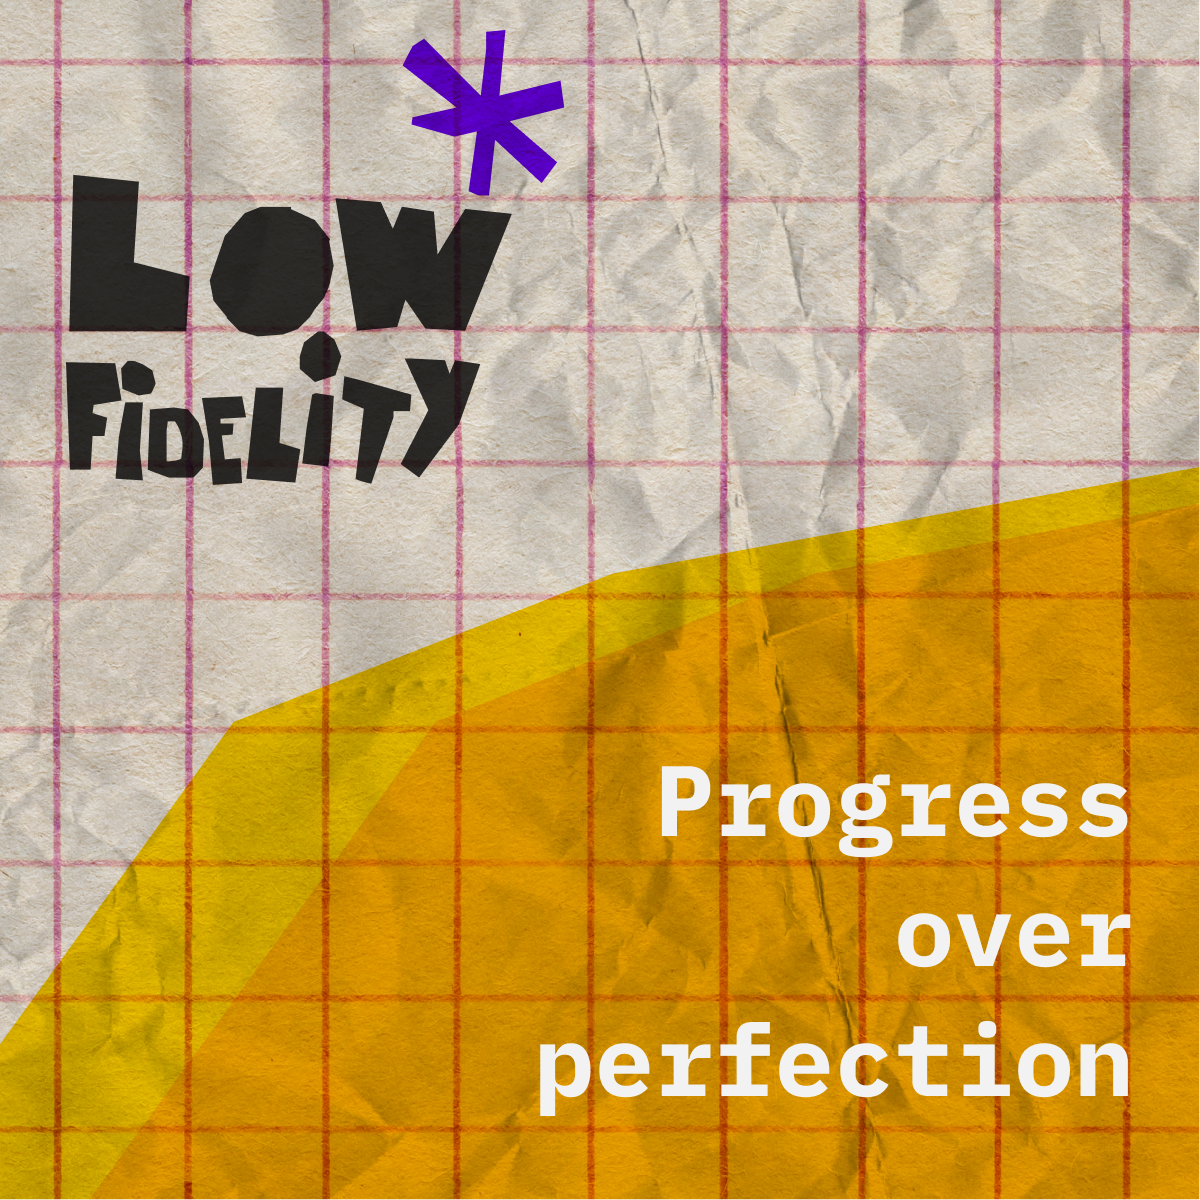 2. Progress over perfection